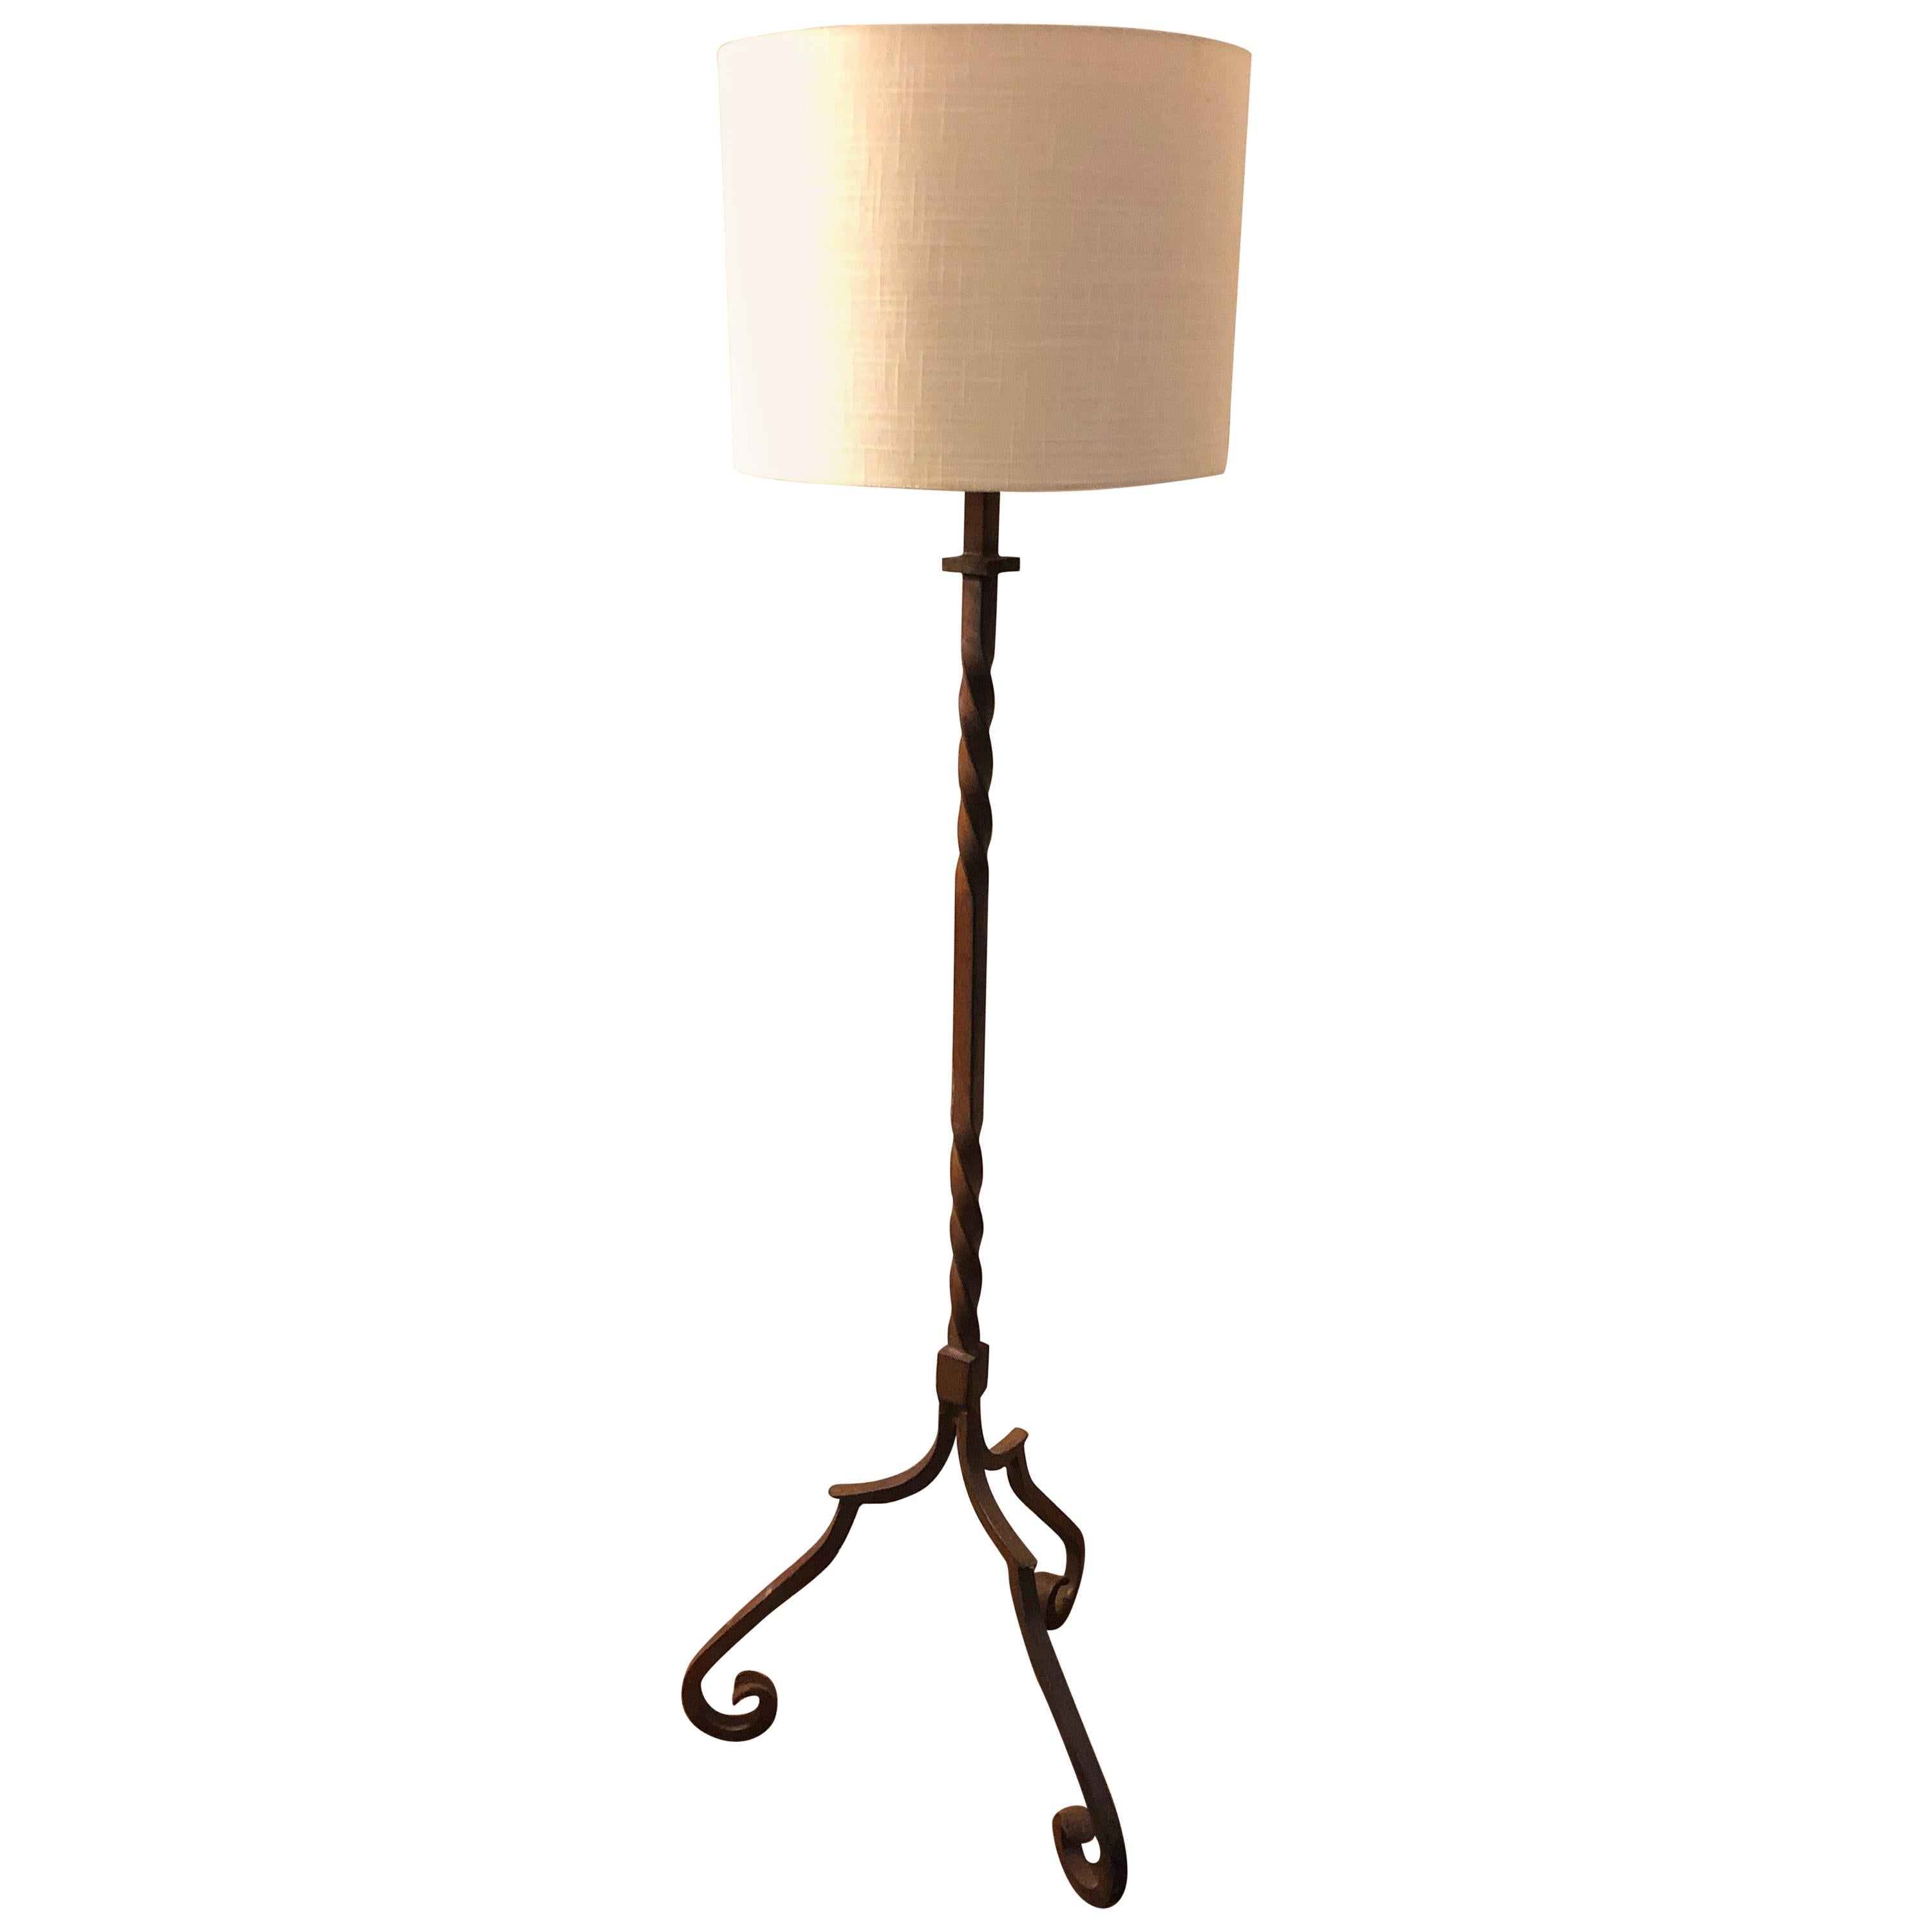 Elegant Spanish Hand Forged Twisted Iron Floor Lamp, Midcentury